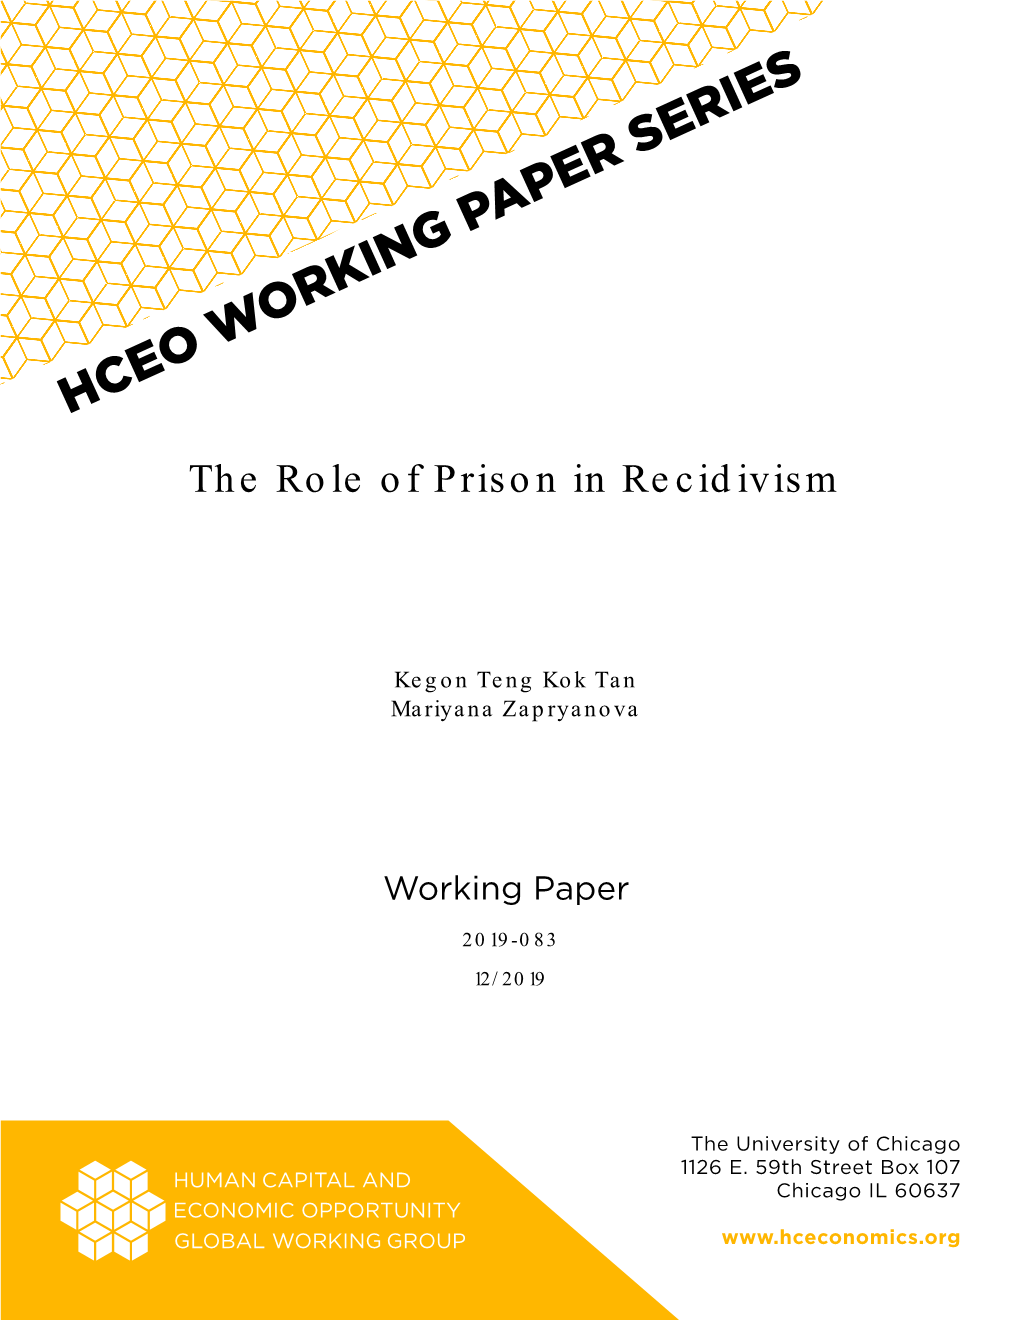 The Role of Prison in Recidivism